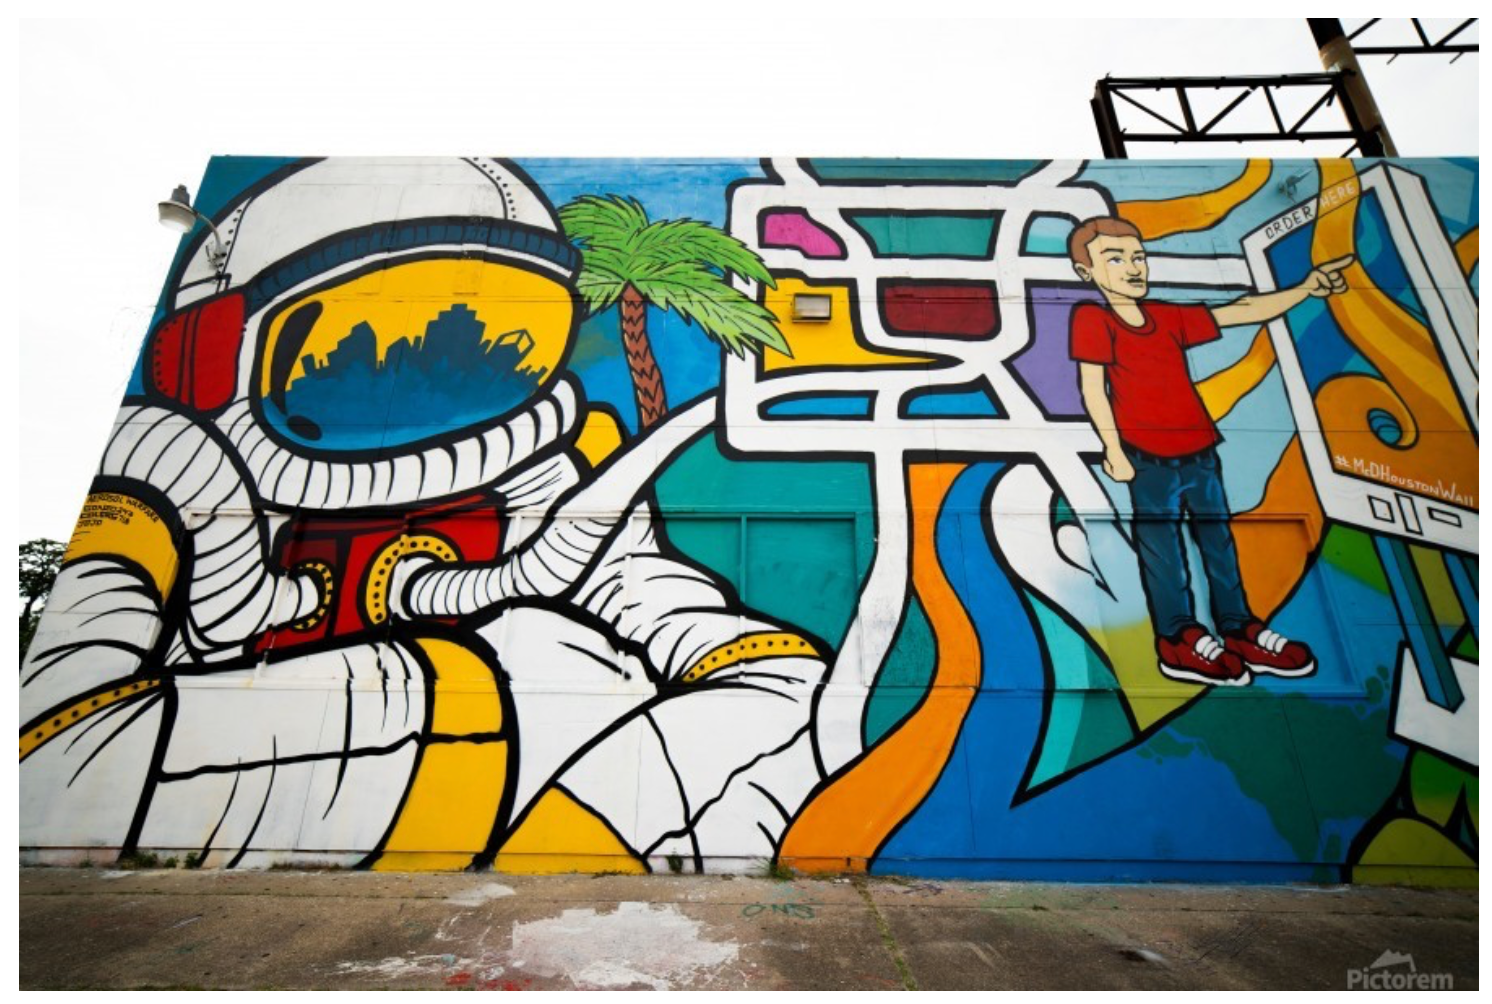 “Iconic Houston” by Jeffrey Chen : Astro Graffiti